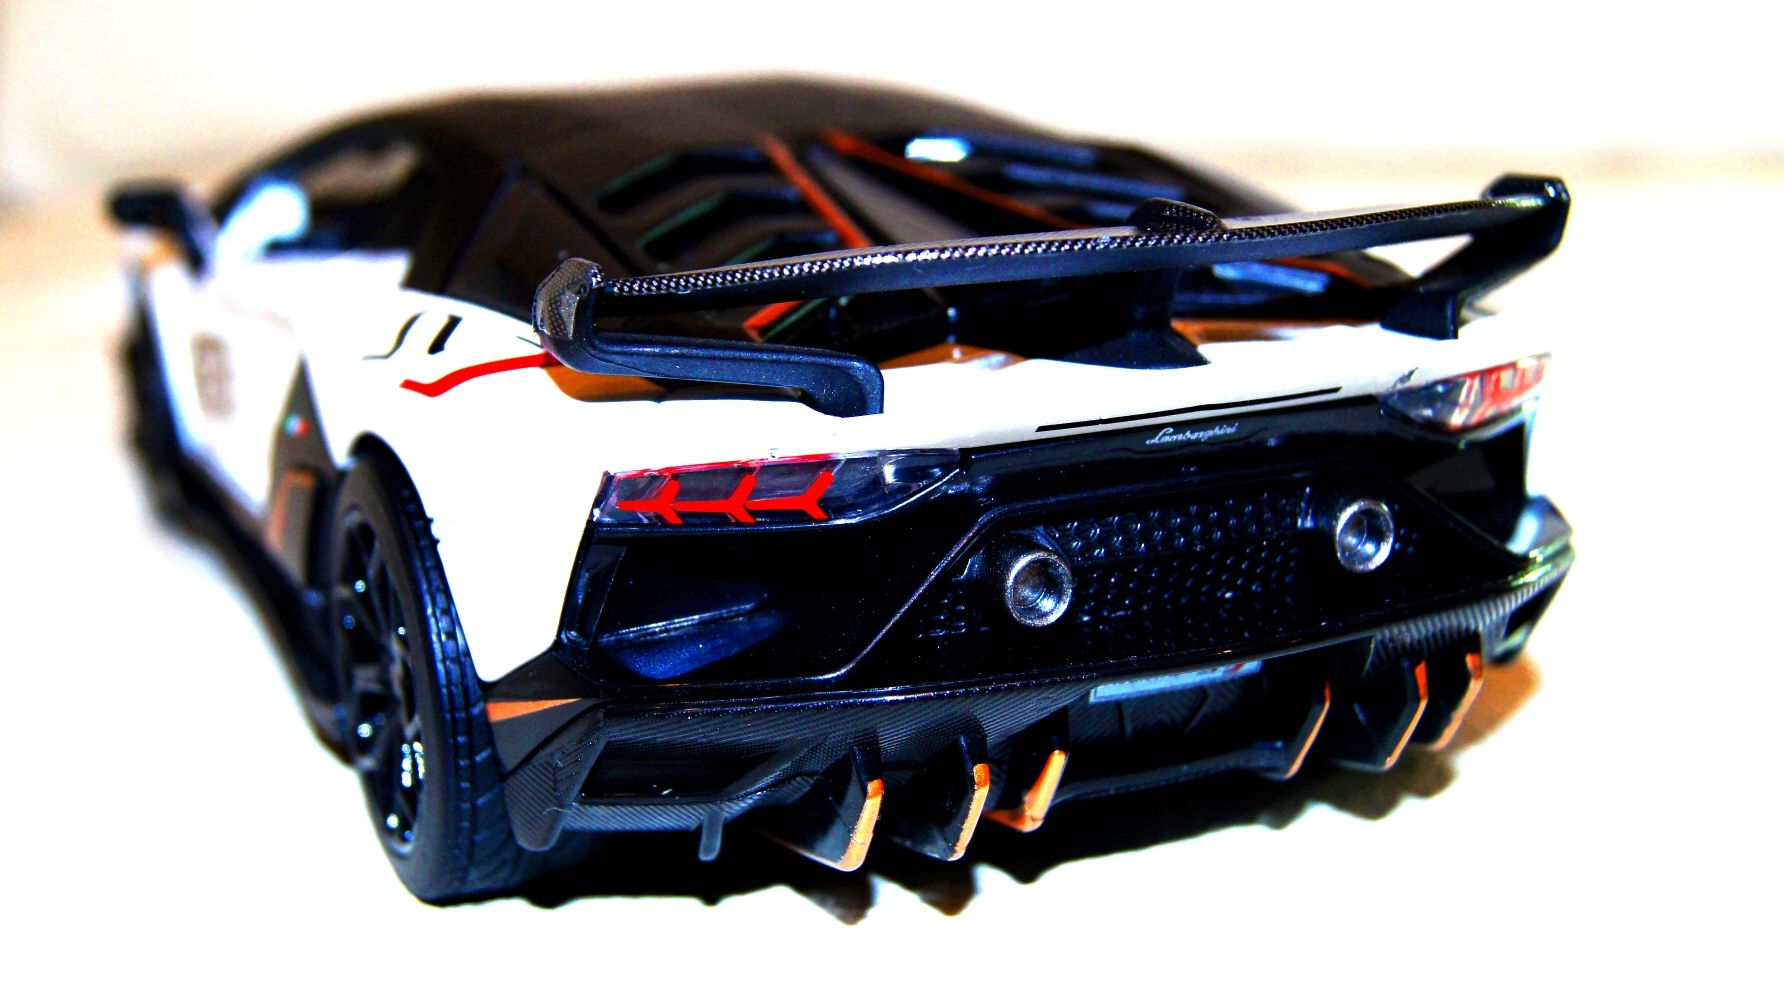 Model, autko, resorak, Lamborghini Aventador1:24 Nowy